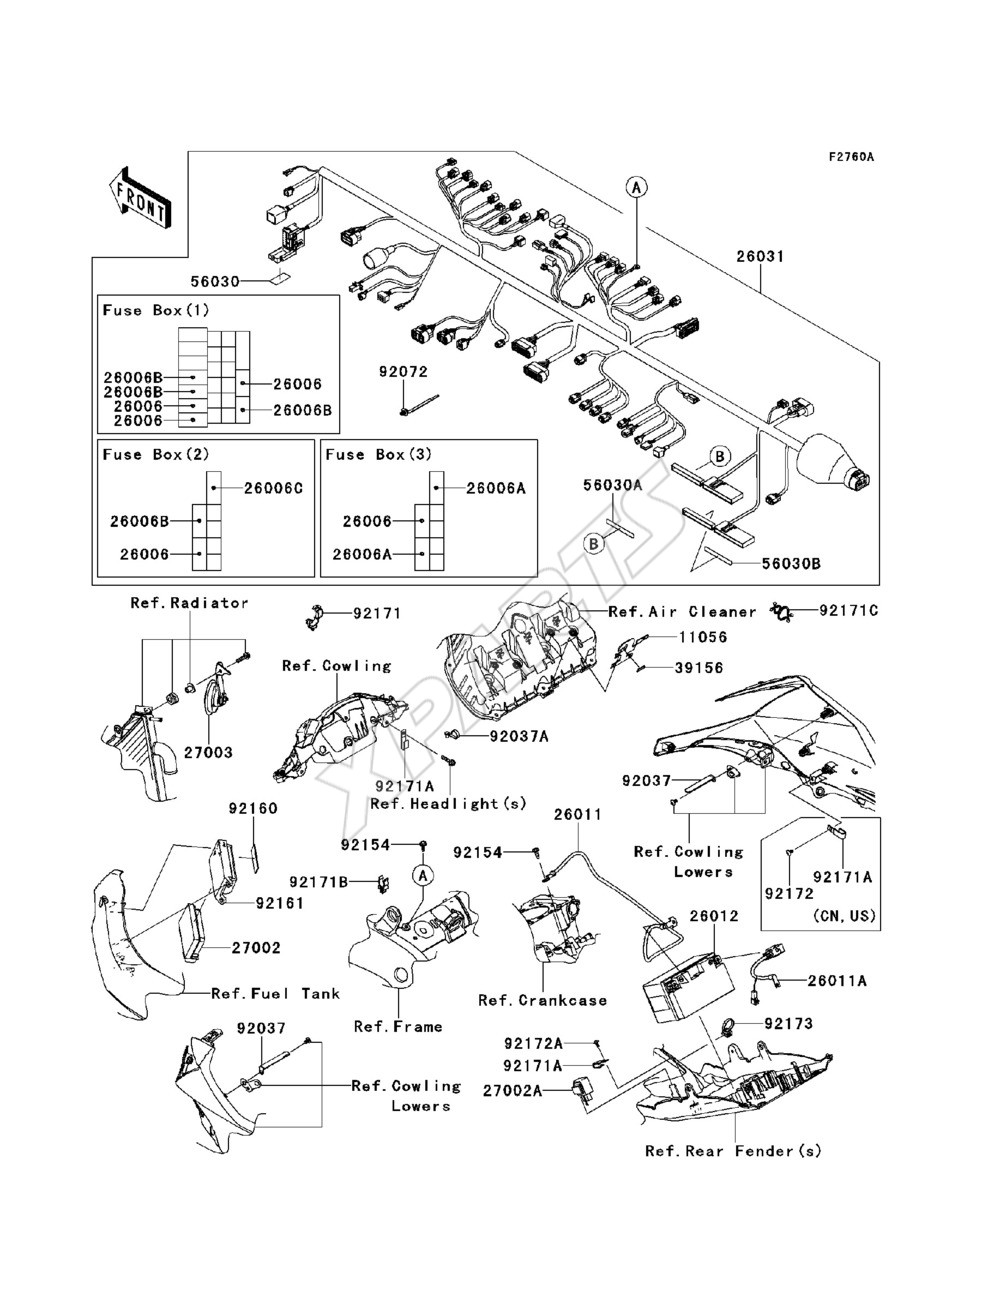 Bild für Kategorie Chassis Electrical Equipment(KCF)